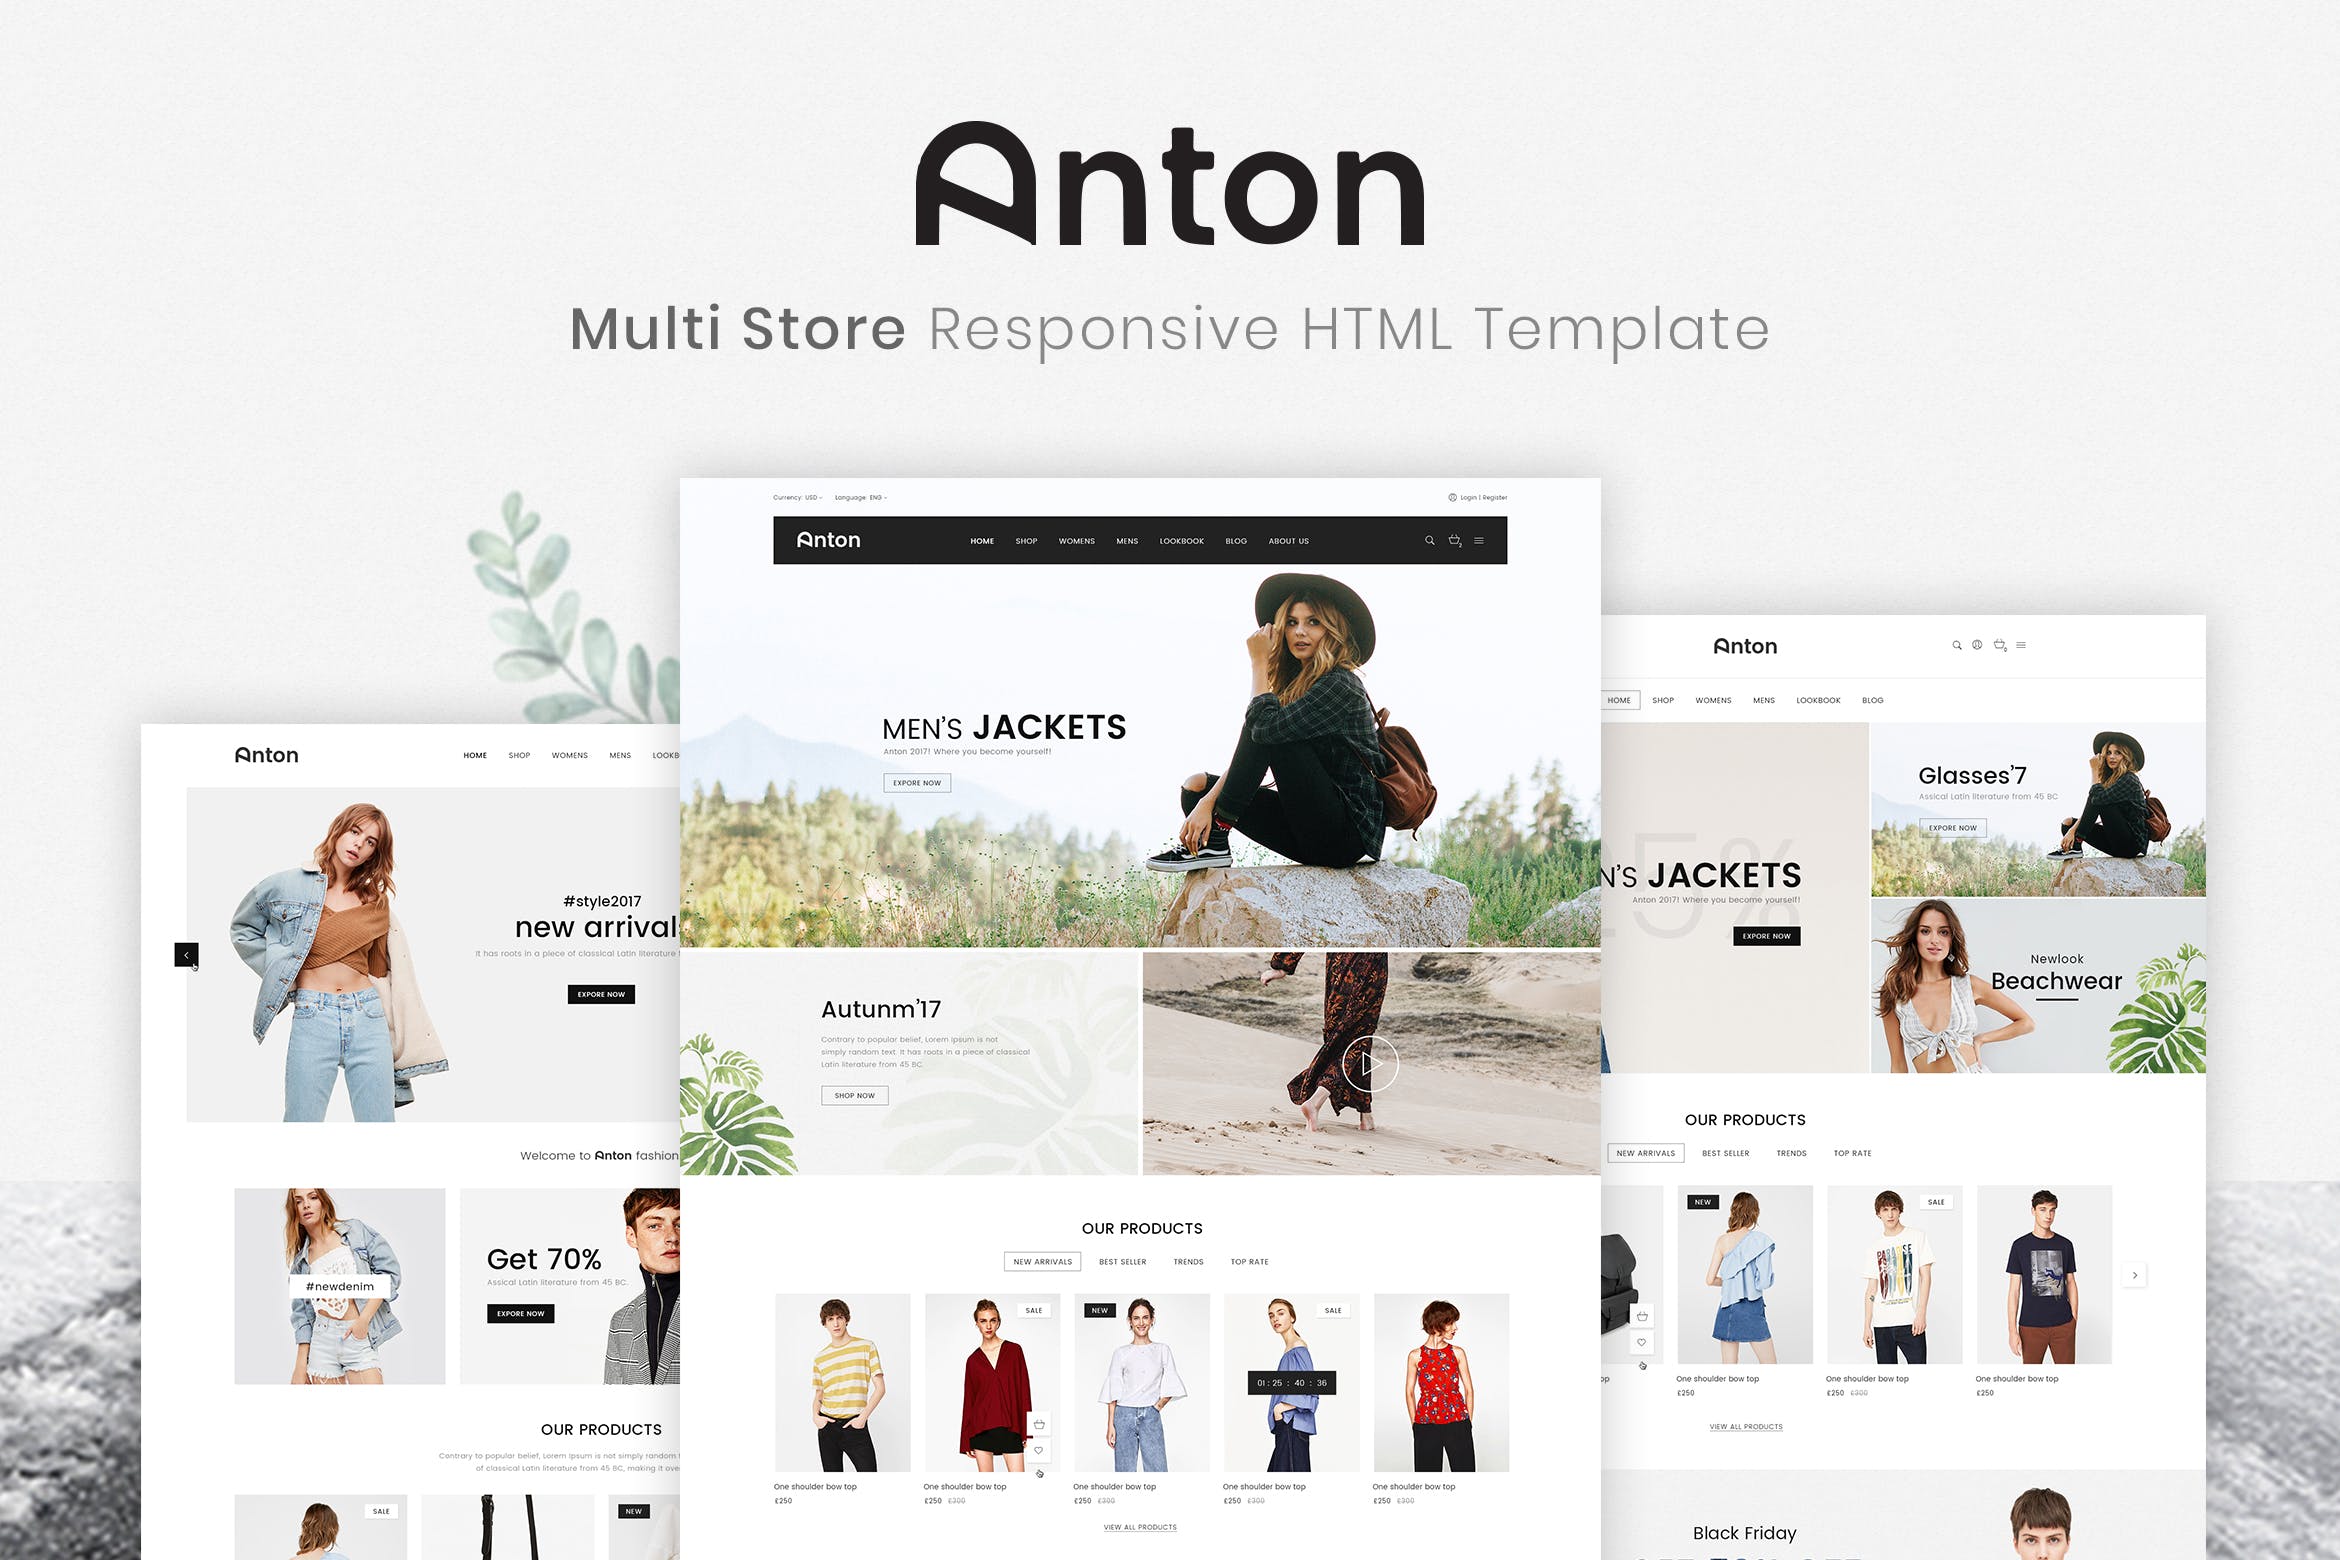 响应式时尚服饰网上商城HTML模板素材库精选素材 Anton | Multi Store Responsive HTML Template插图